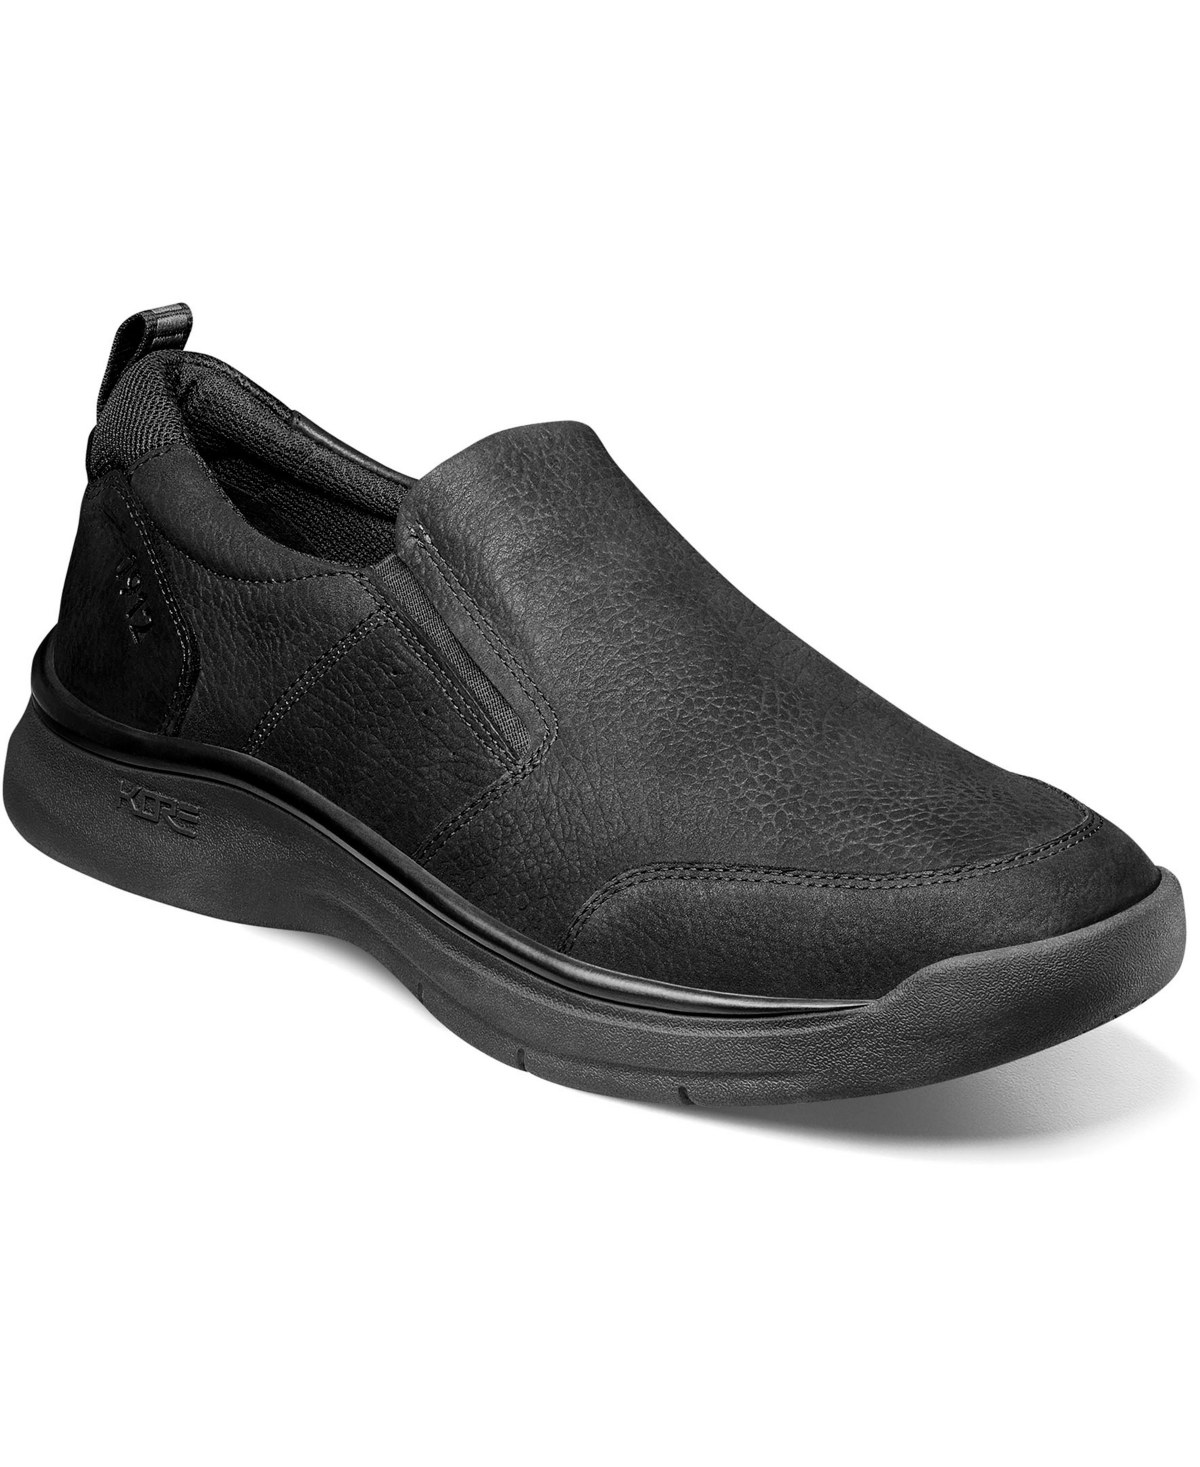 Men's Mac Leather Moc Toe Slip-On Shoes - Brown